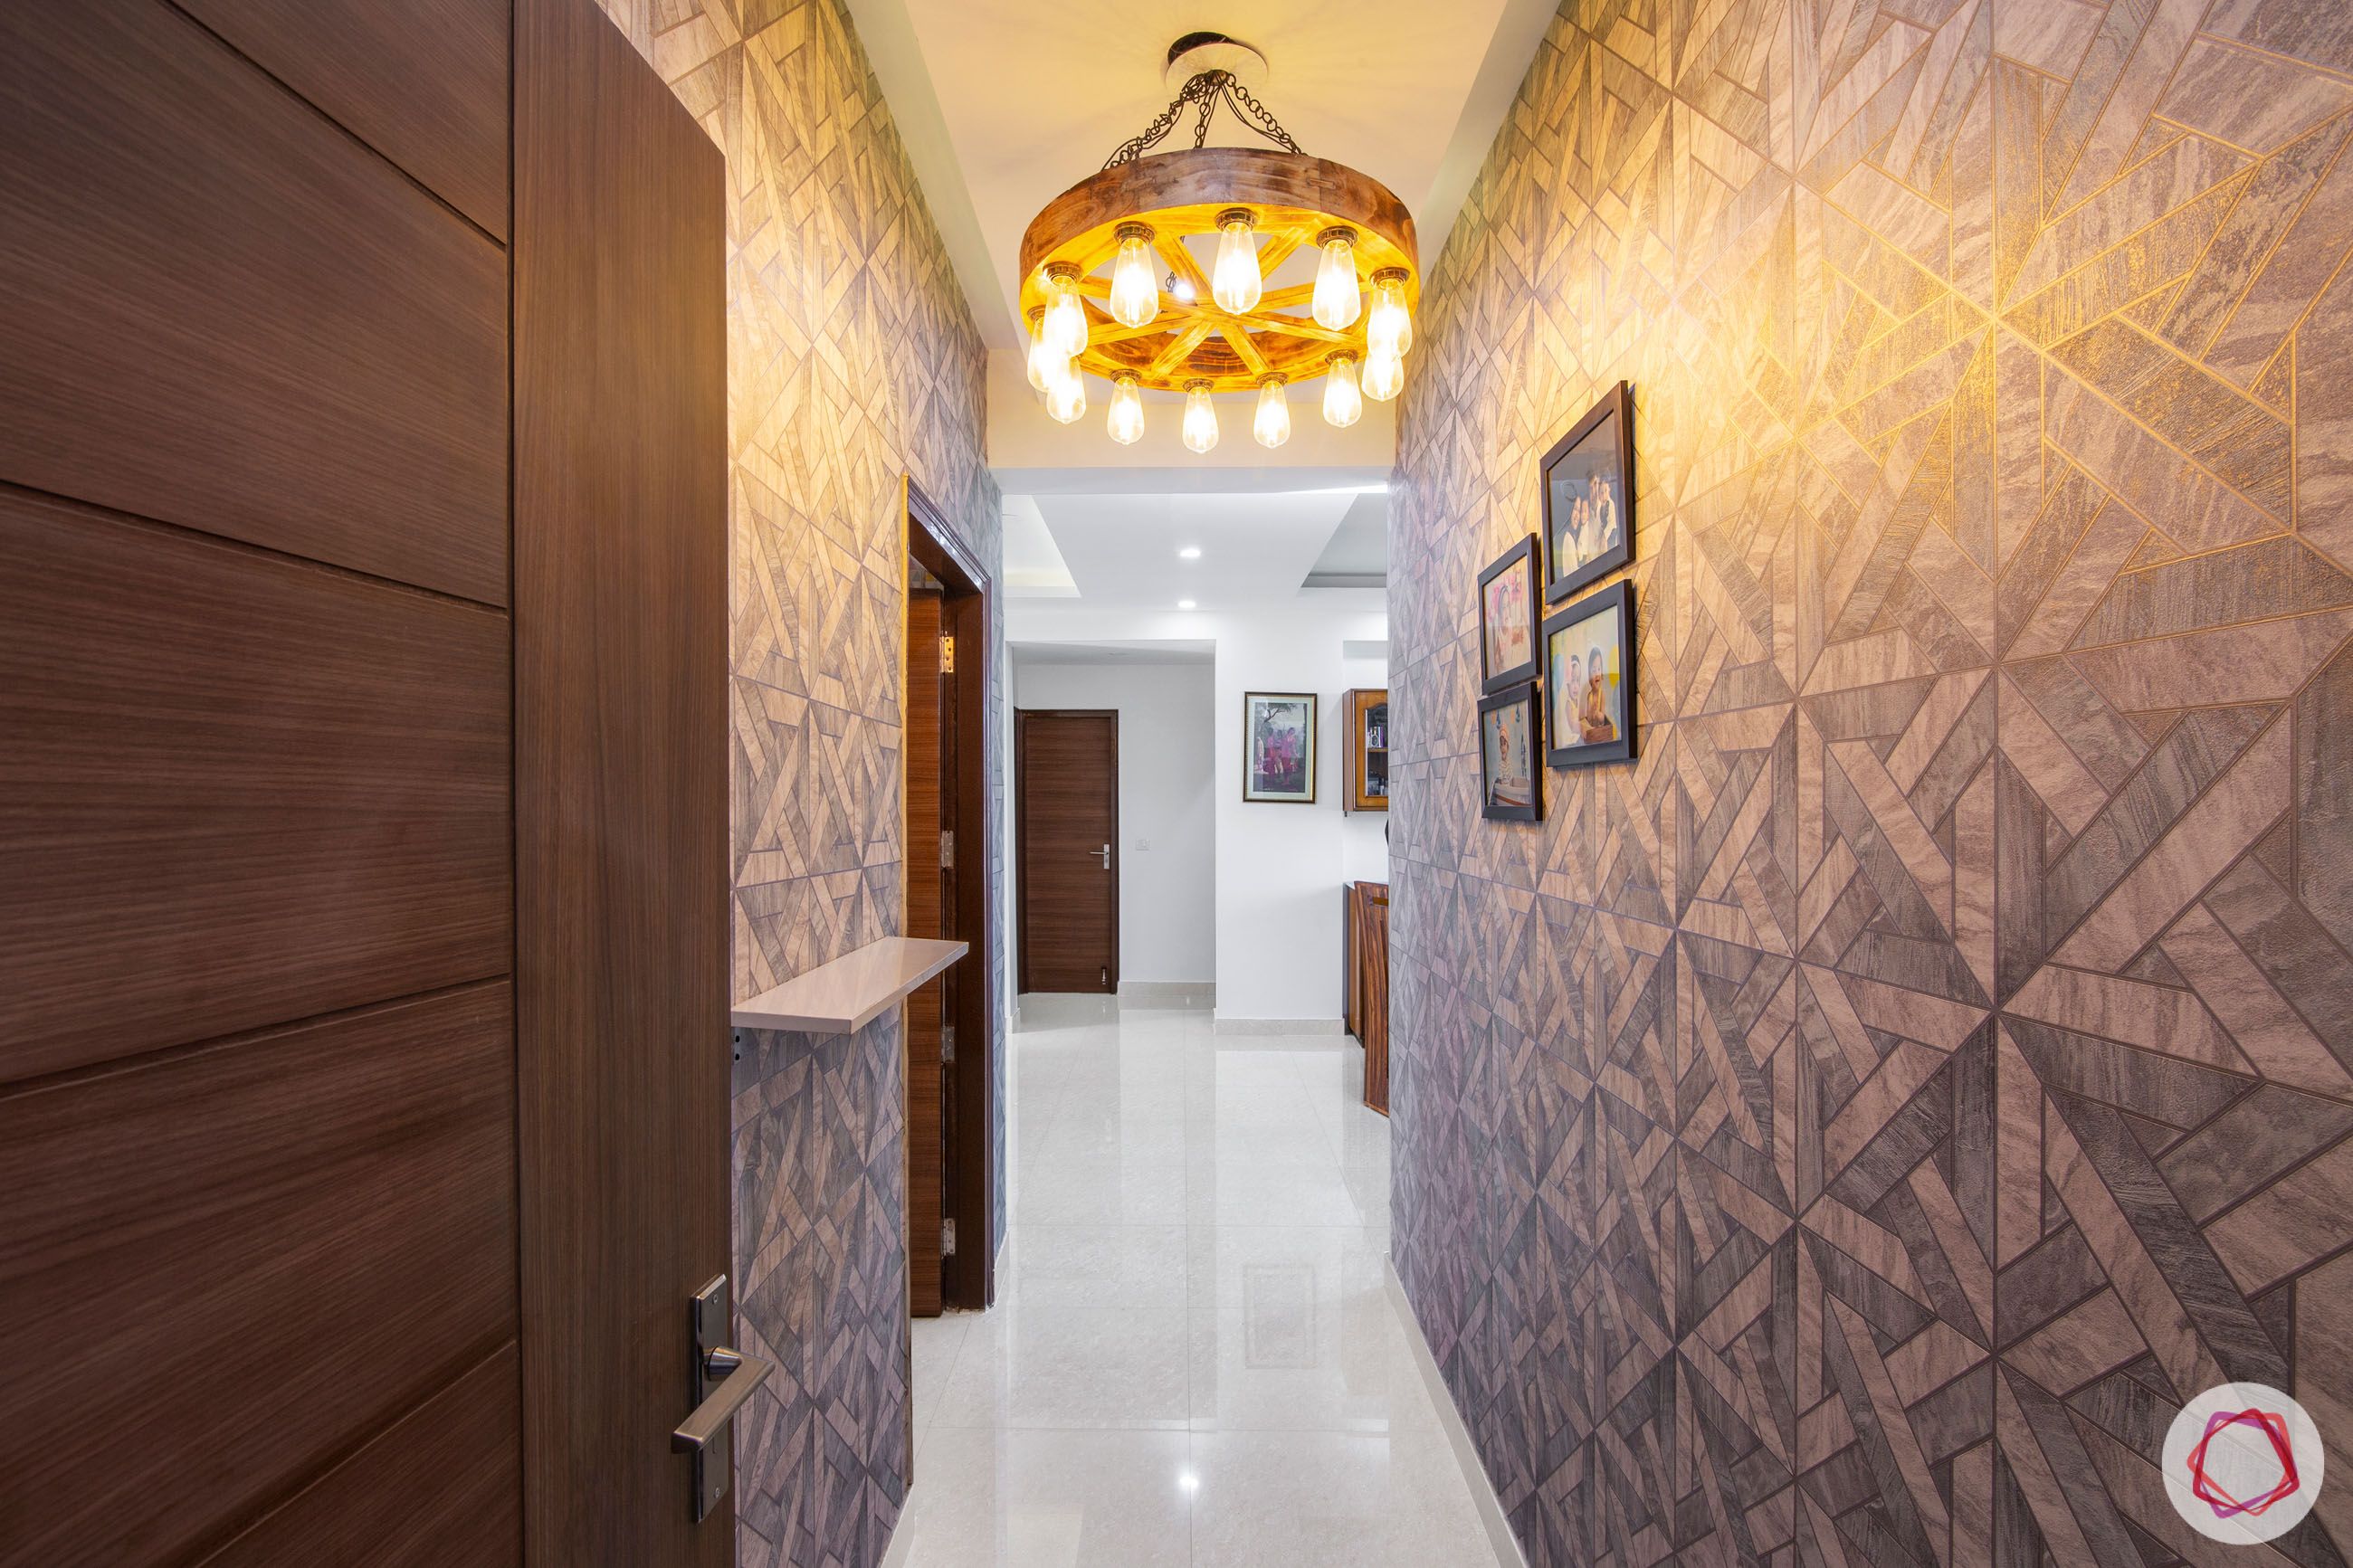 entryway-lighting-chandeliers-wallpaper-ledge-photos